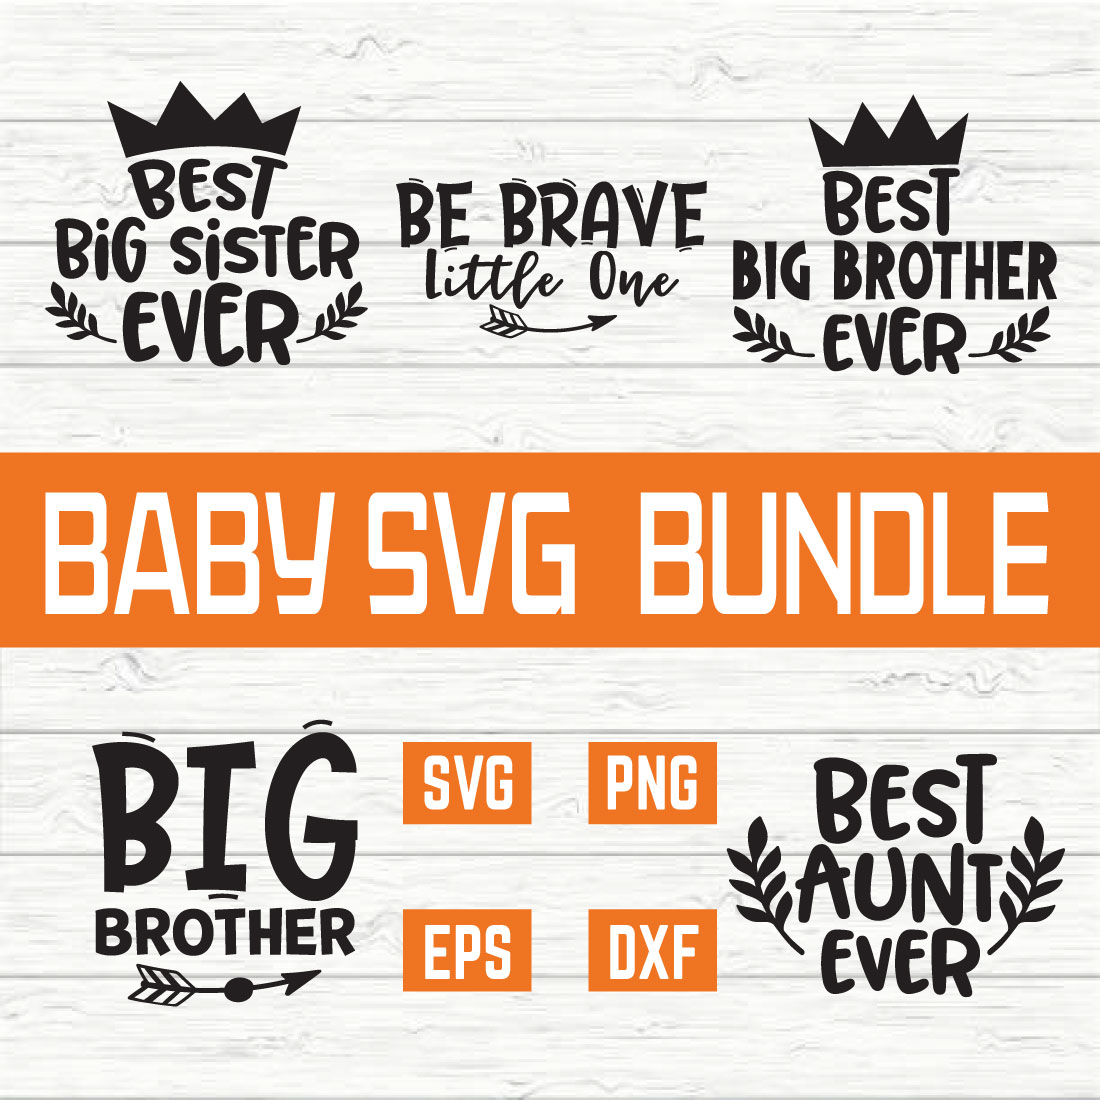 Baby Svg Typography Bundle vol 19 cover image.